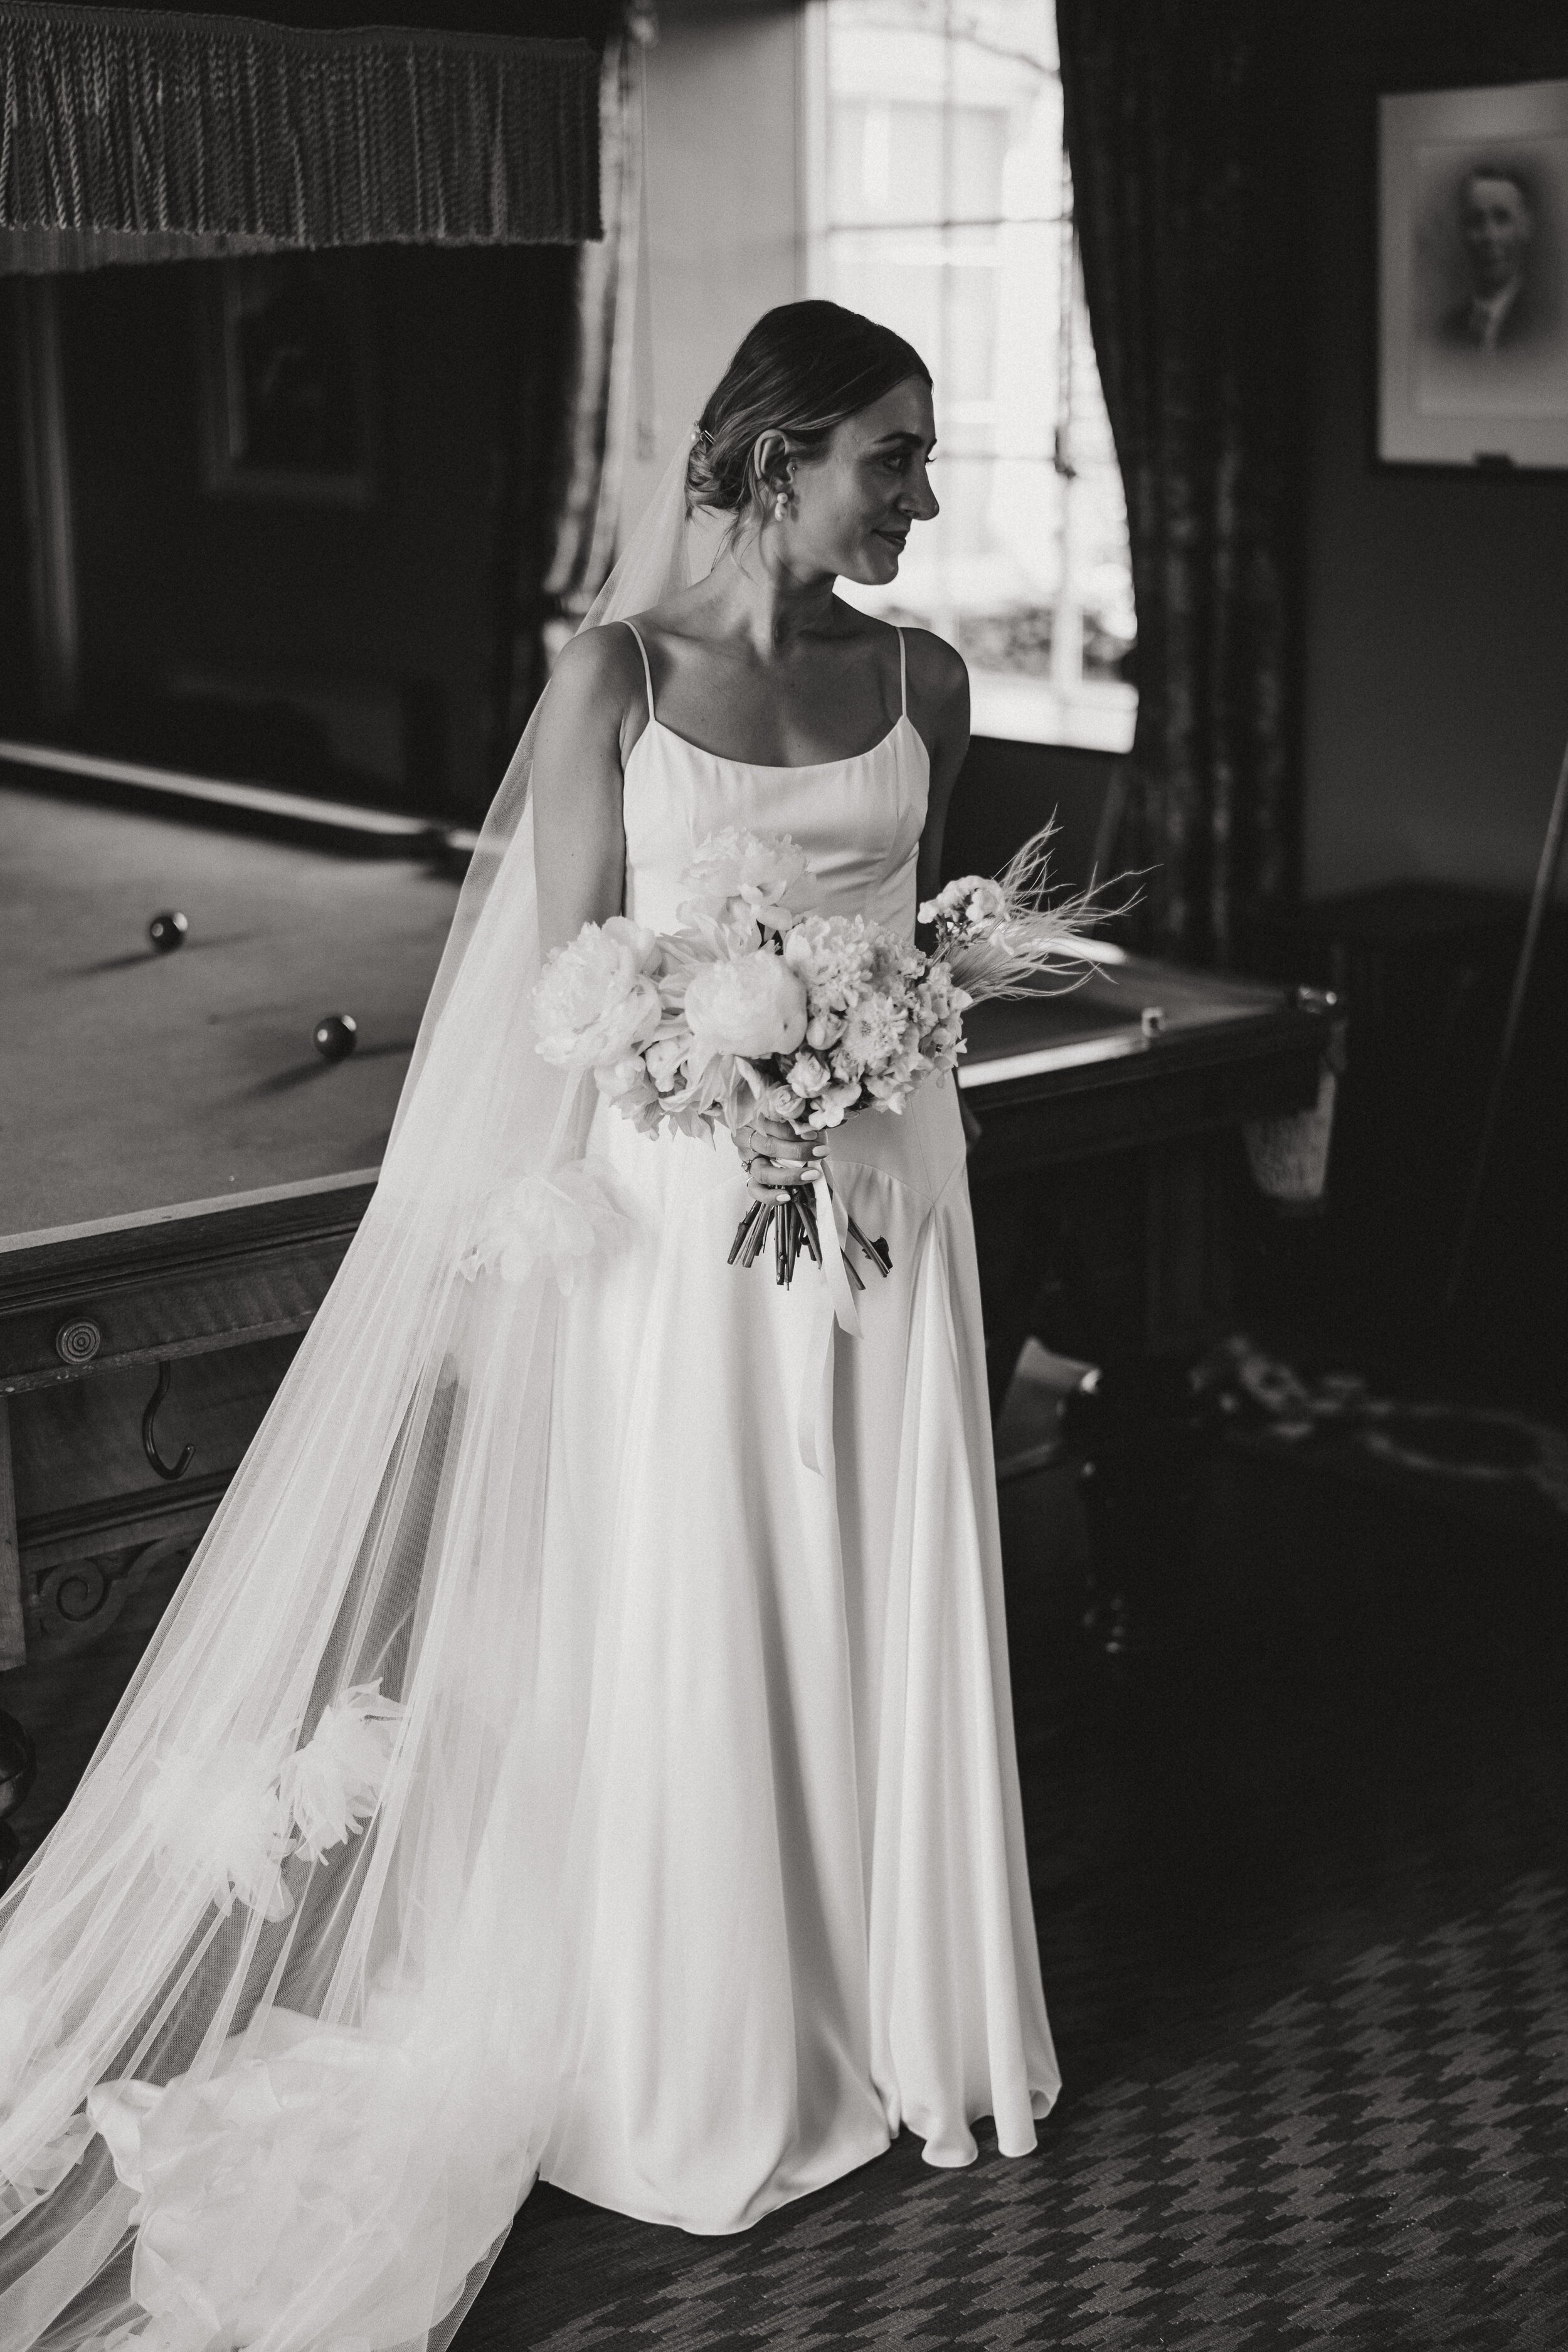 Beautiful bride Lauren wore a wedding dress by Halfpenny London